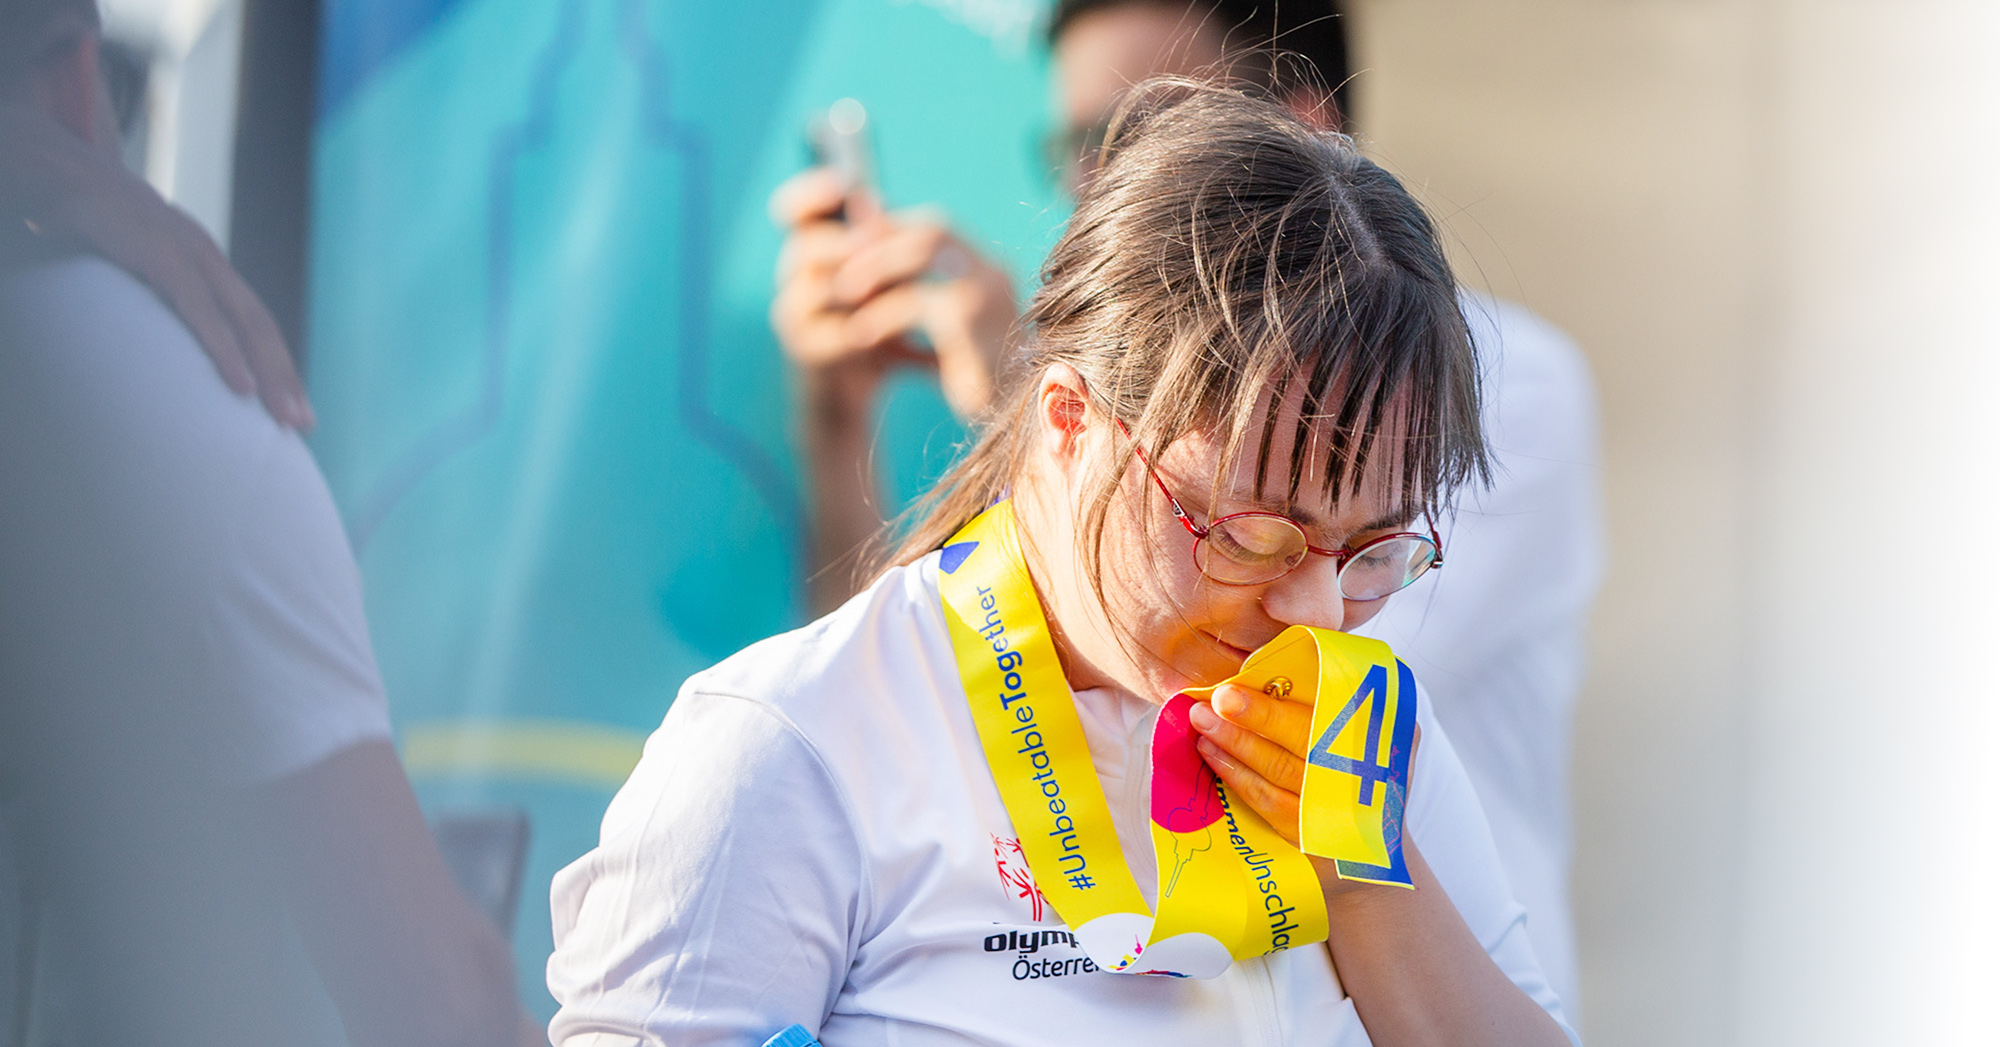 Agnes Zenz | GEPA pictures/Special Olympics